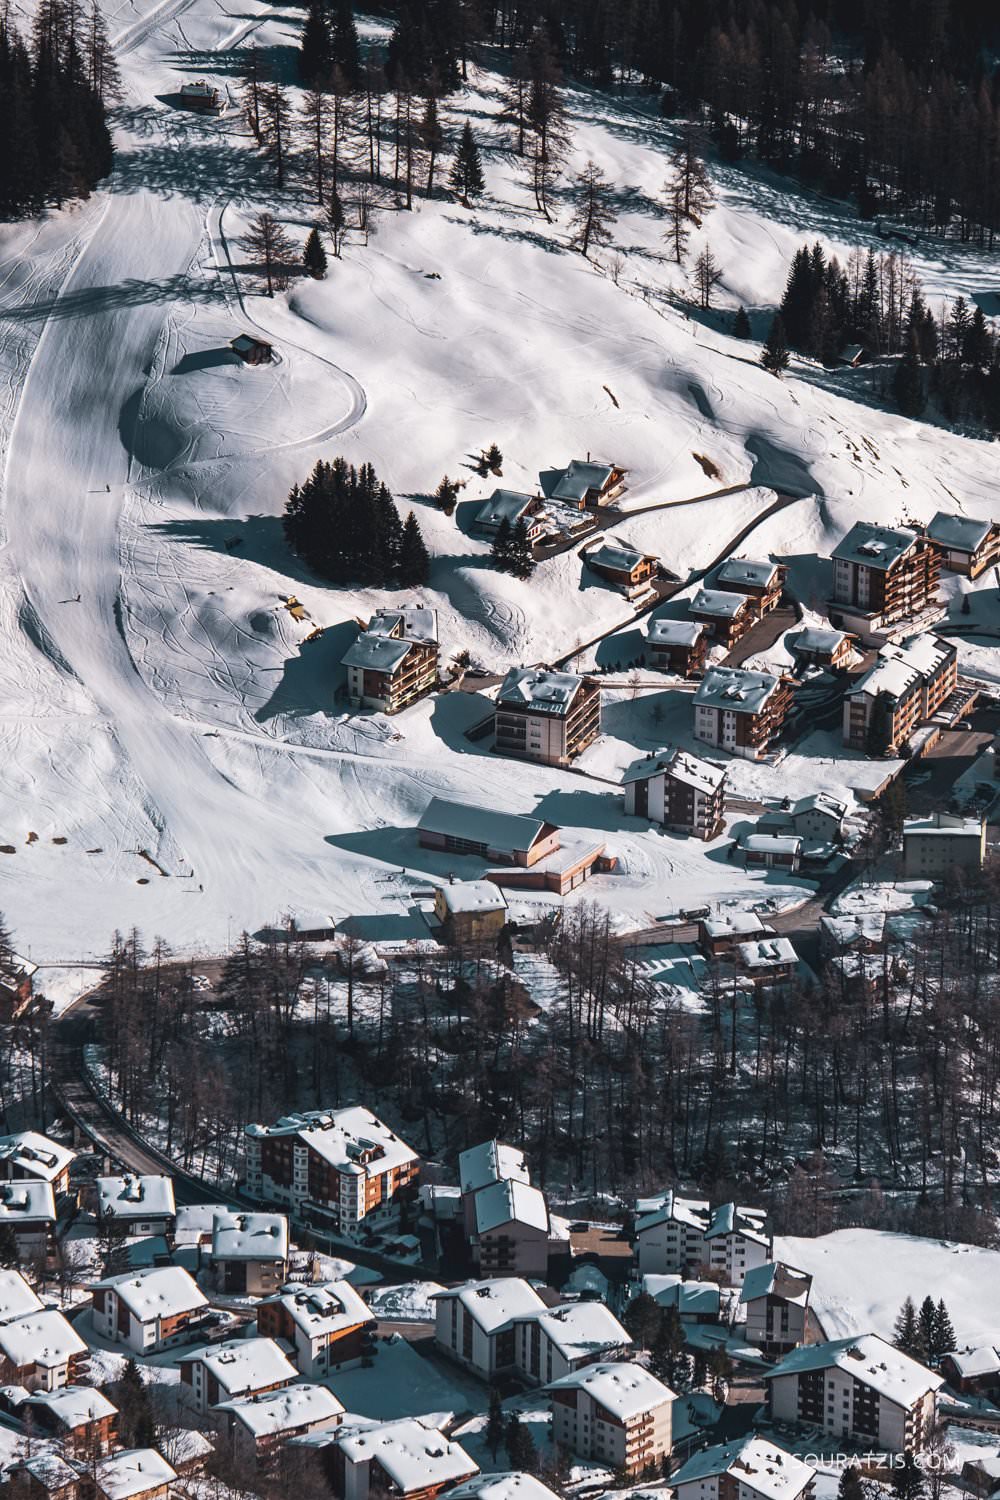 Laukerbad village and ski resort in Valais Wallis Swiss Alps